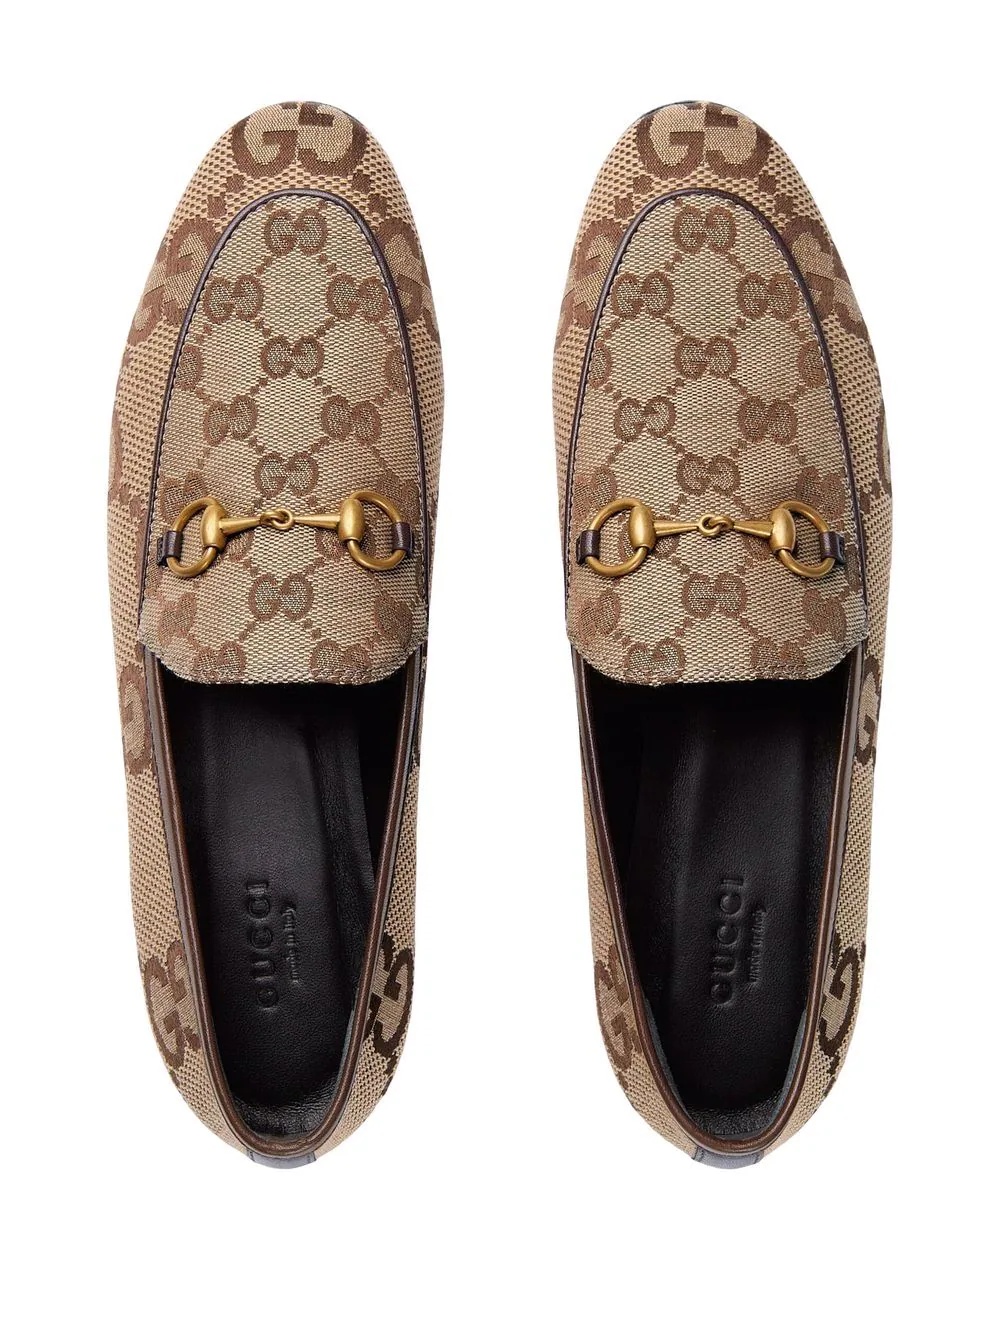 GG Gucci Jordaan loafers - 4